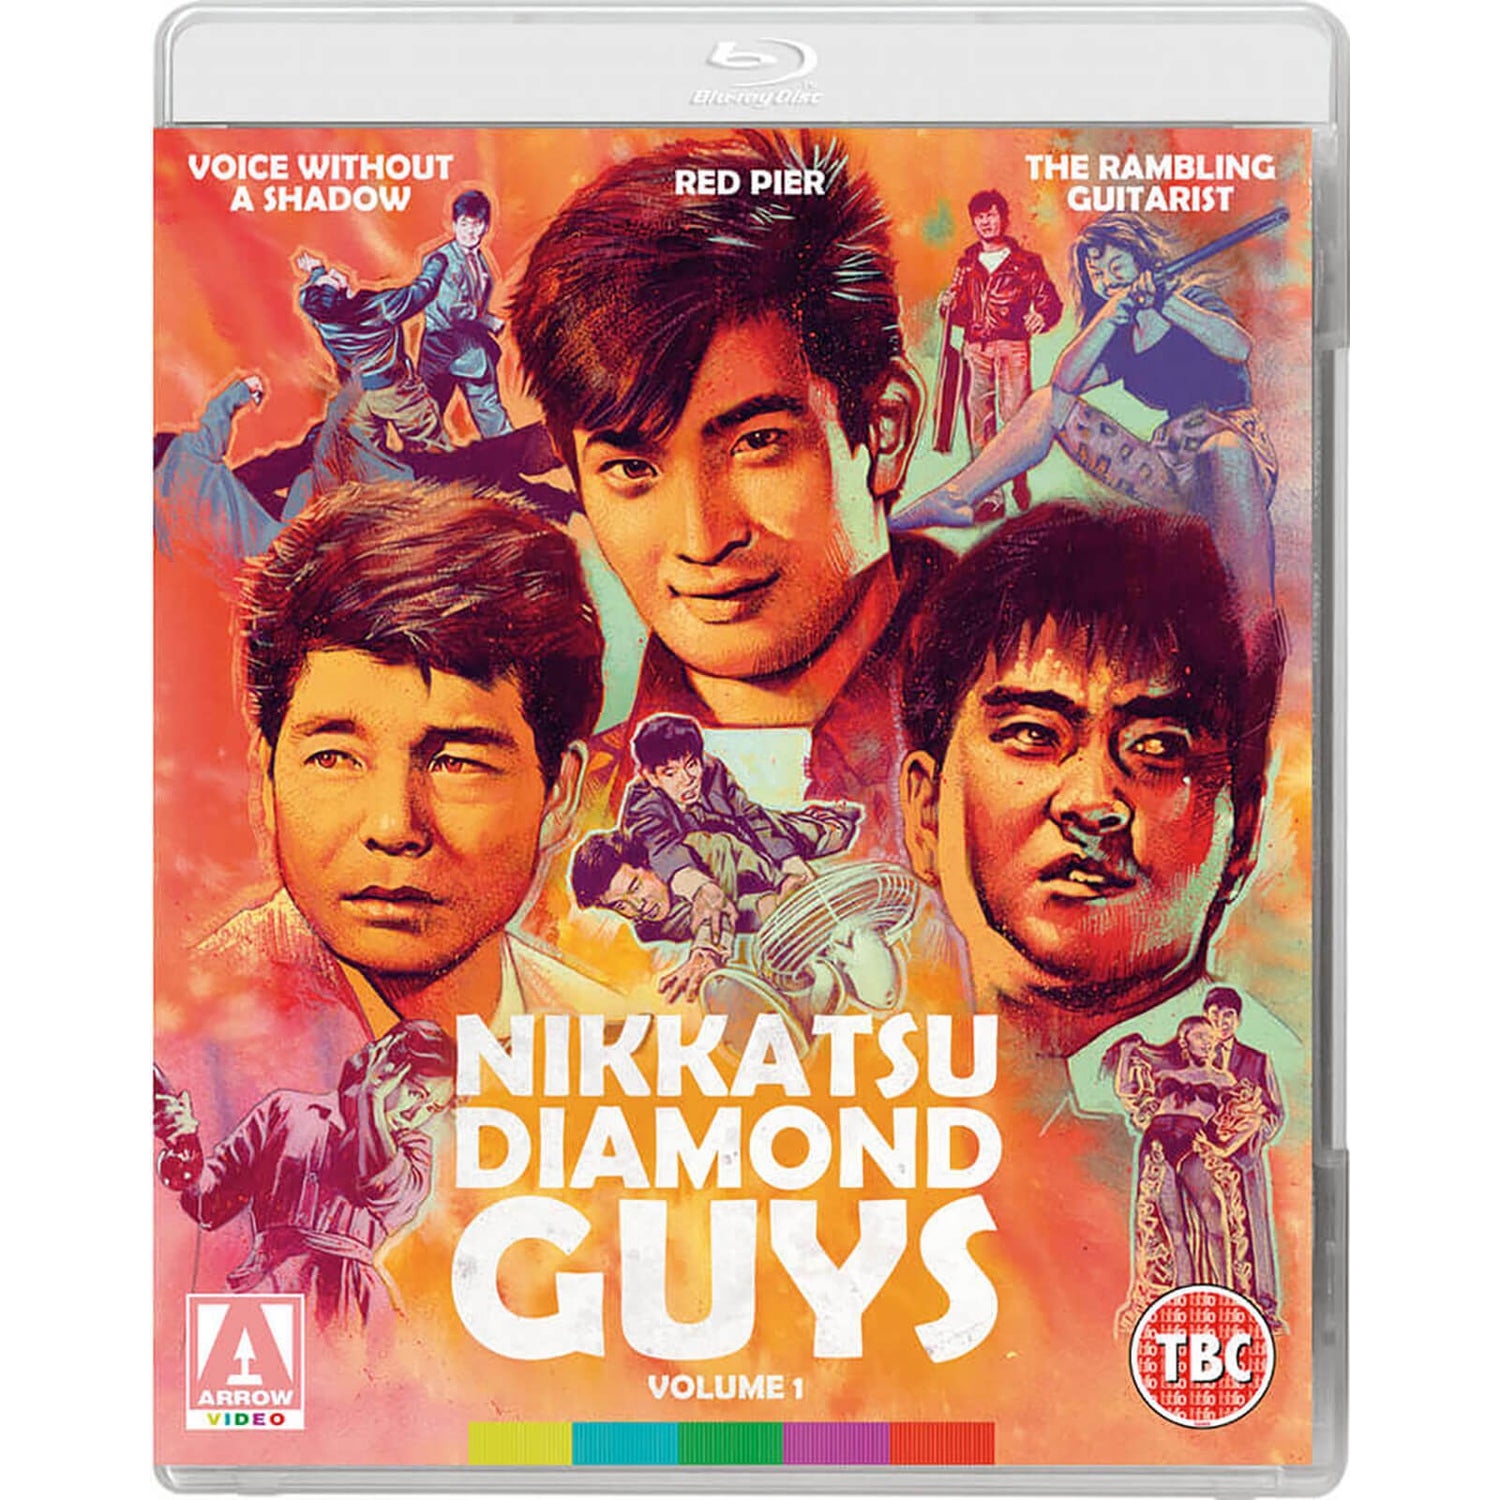 Nikkatsu Diamond Guys: Volume 1 - Dual Format (Includes DVD)